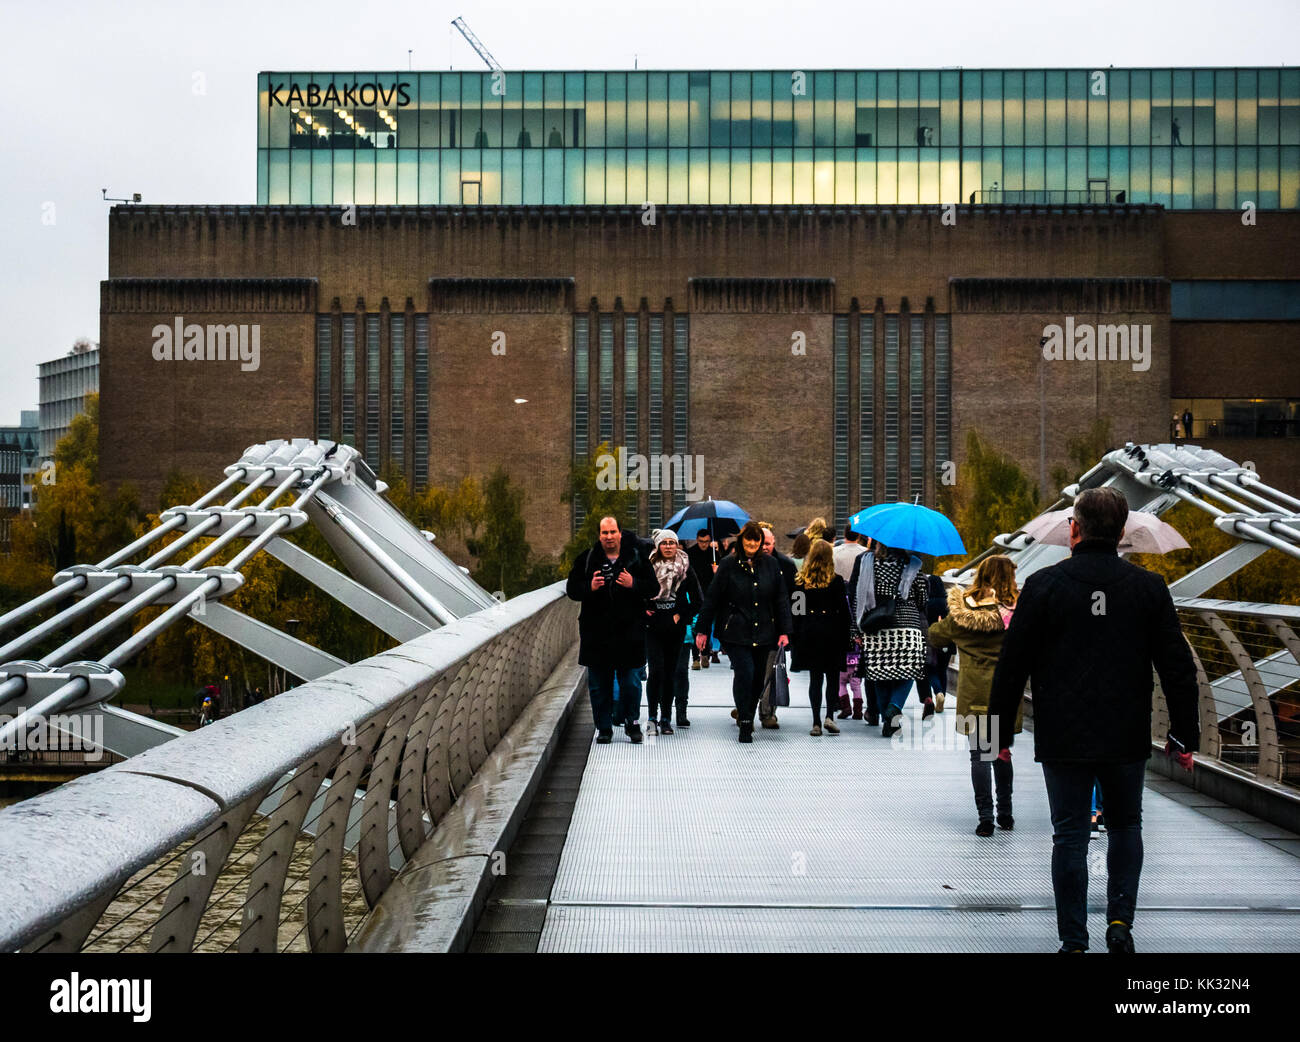 People walking on Millennium Bridge on rainy day with umbrellas to lit up Tate Modern Art Gallery with Kabakovs exhibition, London, England, UK Stock Photo